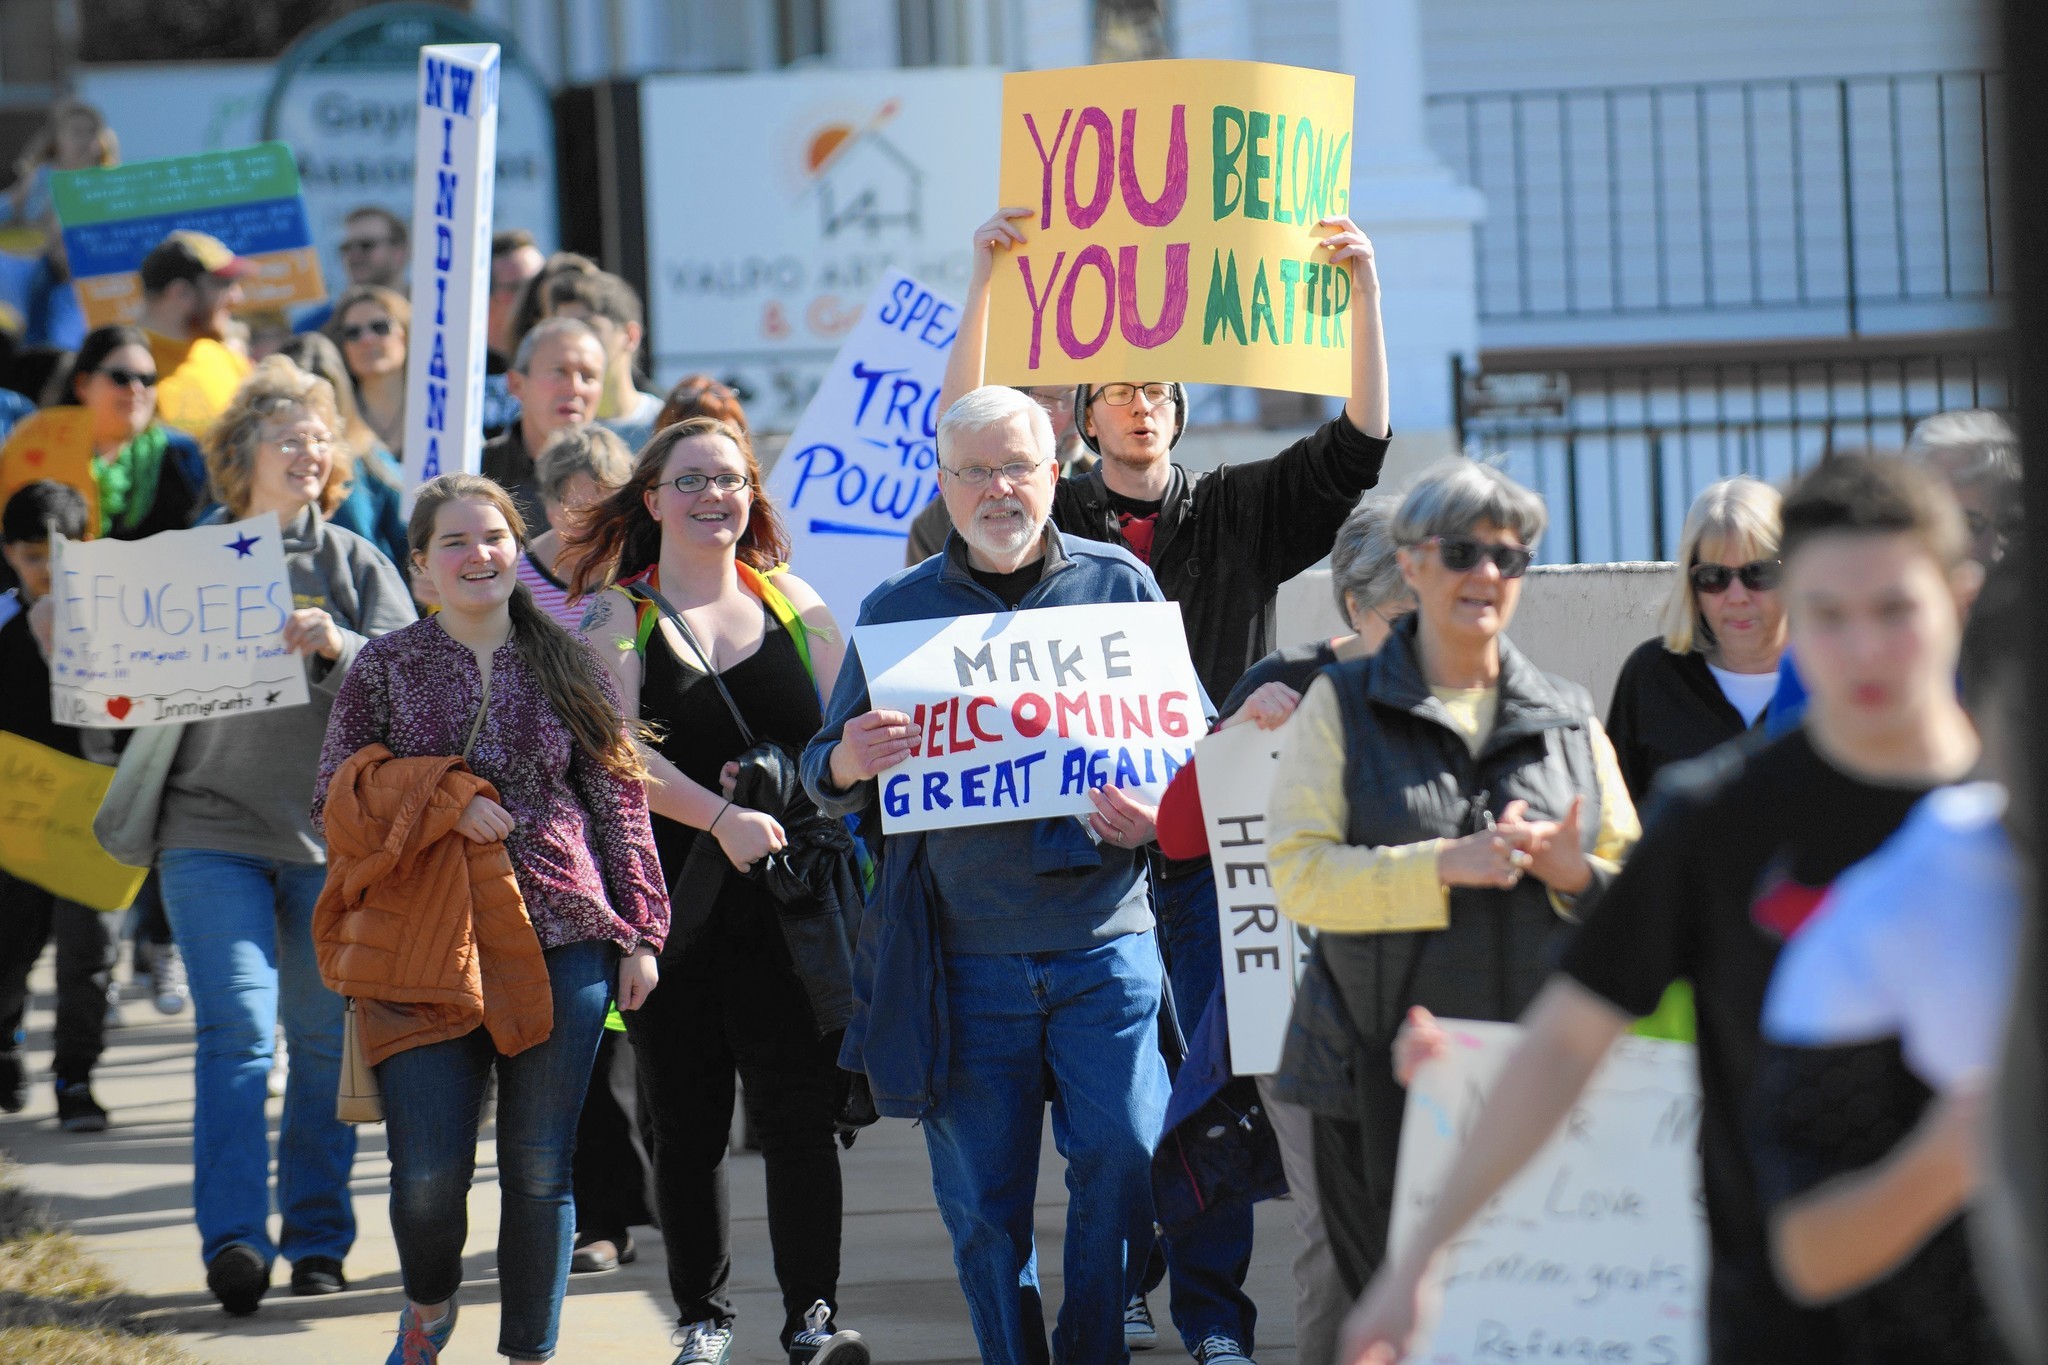 Valparaiso immigration march promotes messages of tolerance ... - Chicago Tribune